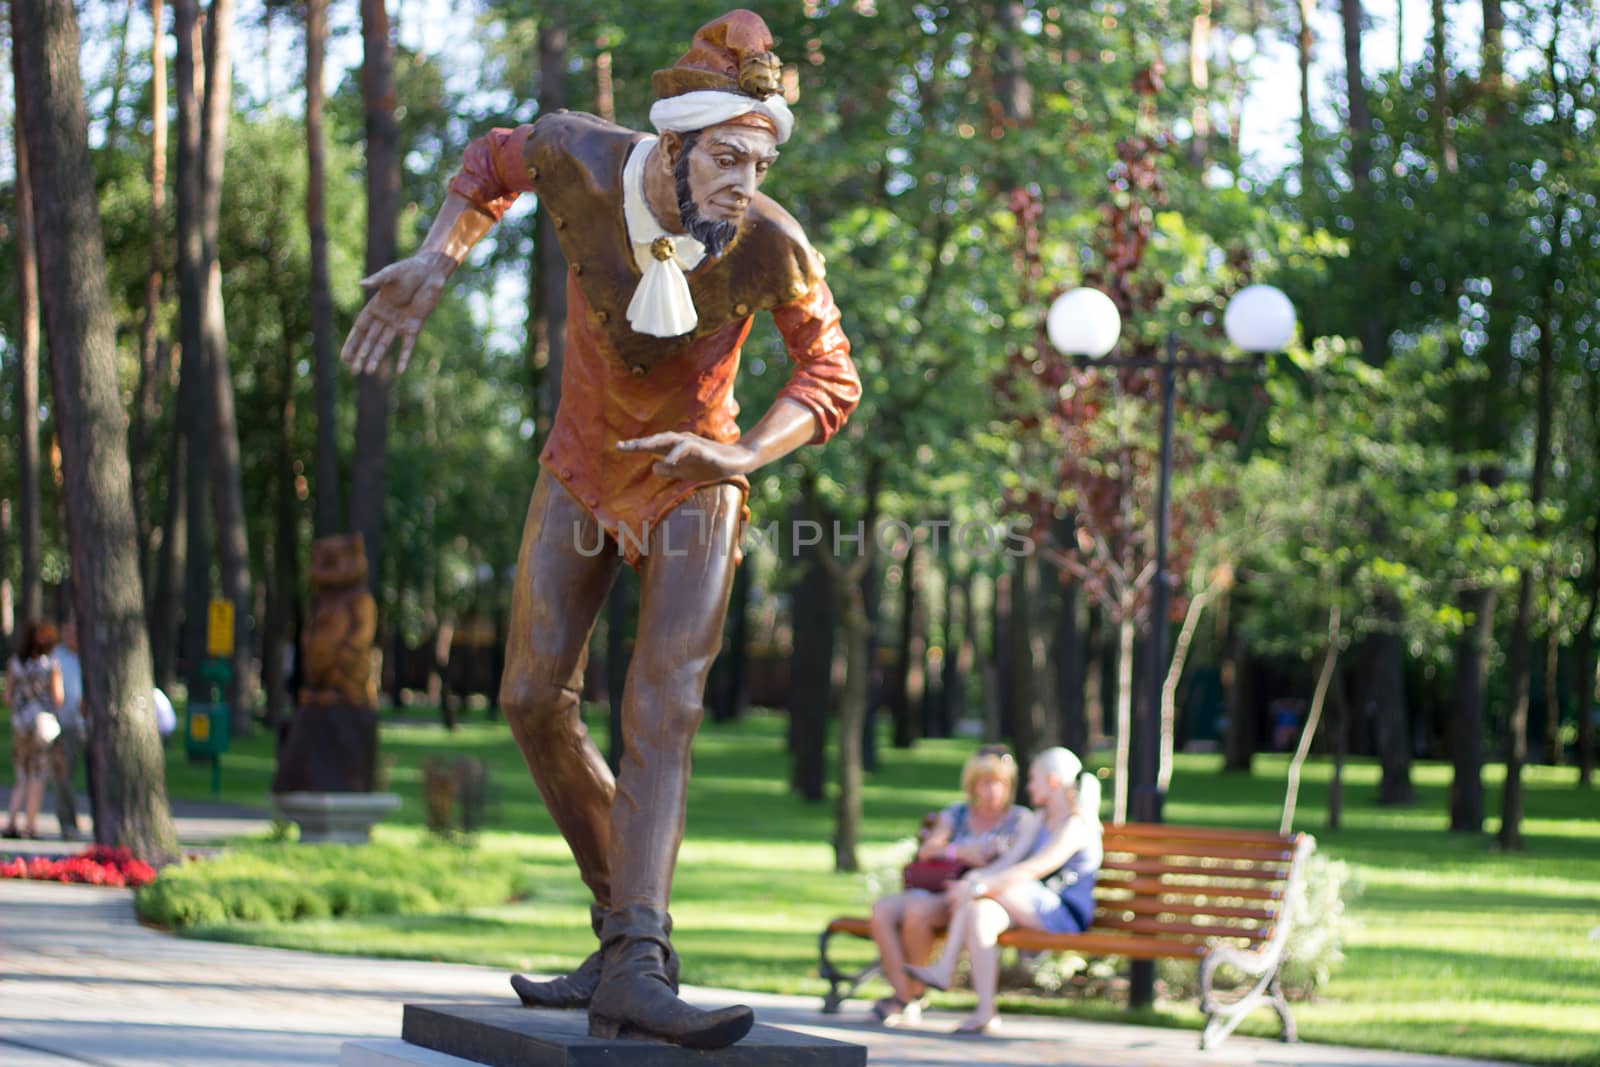 Wooden statue of Joker in city park by VeraVerano